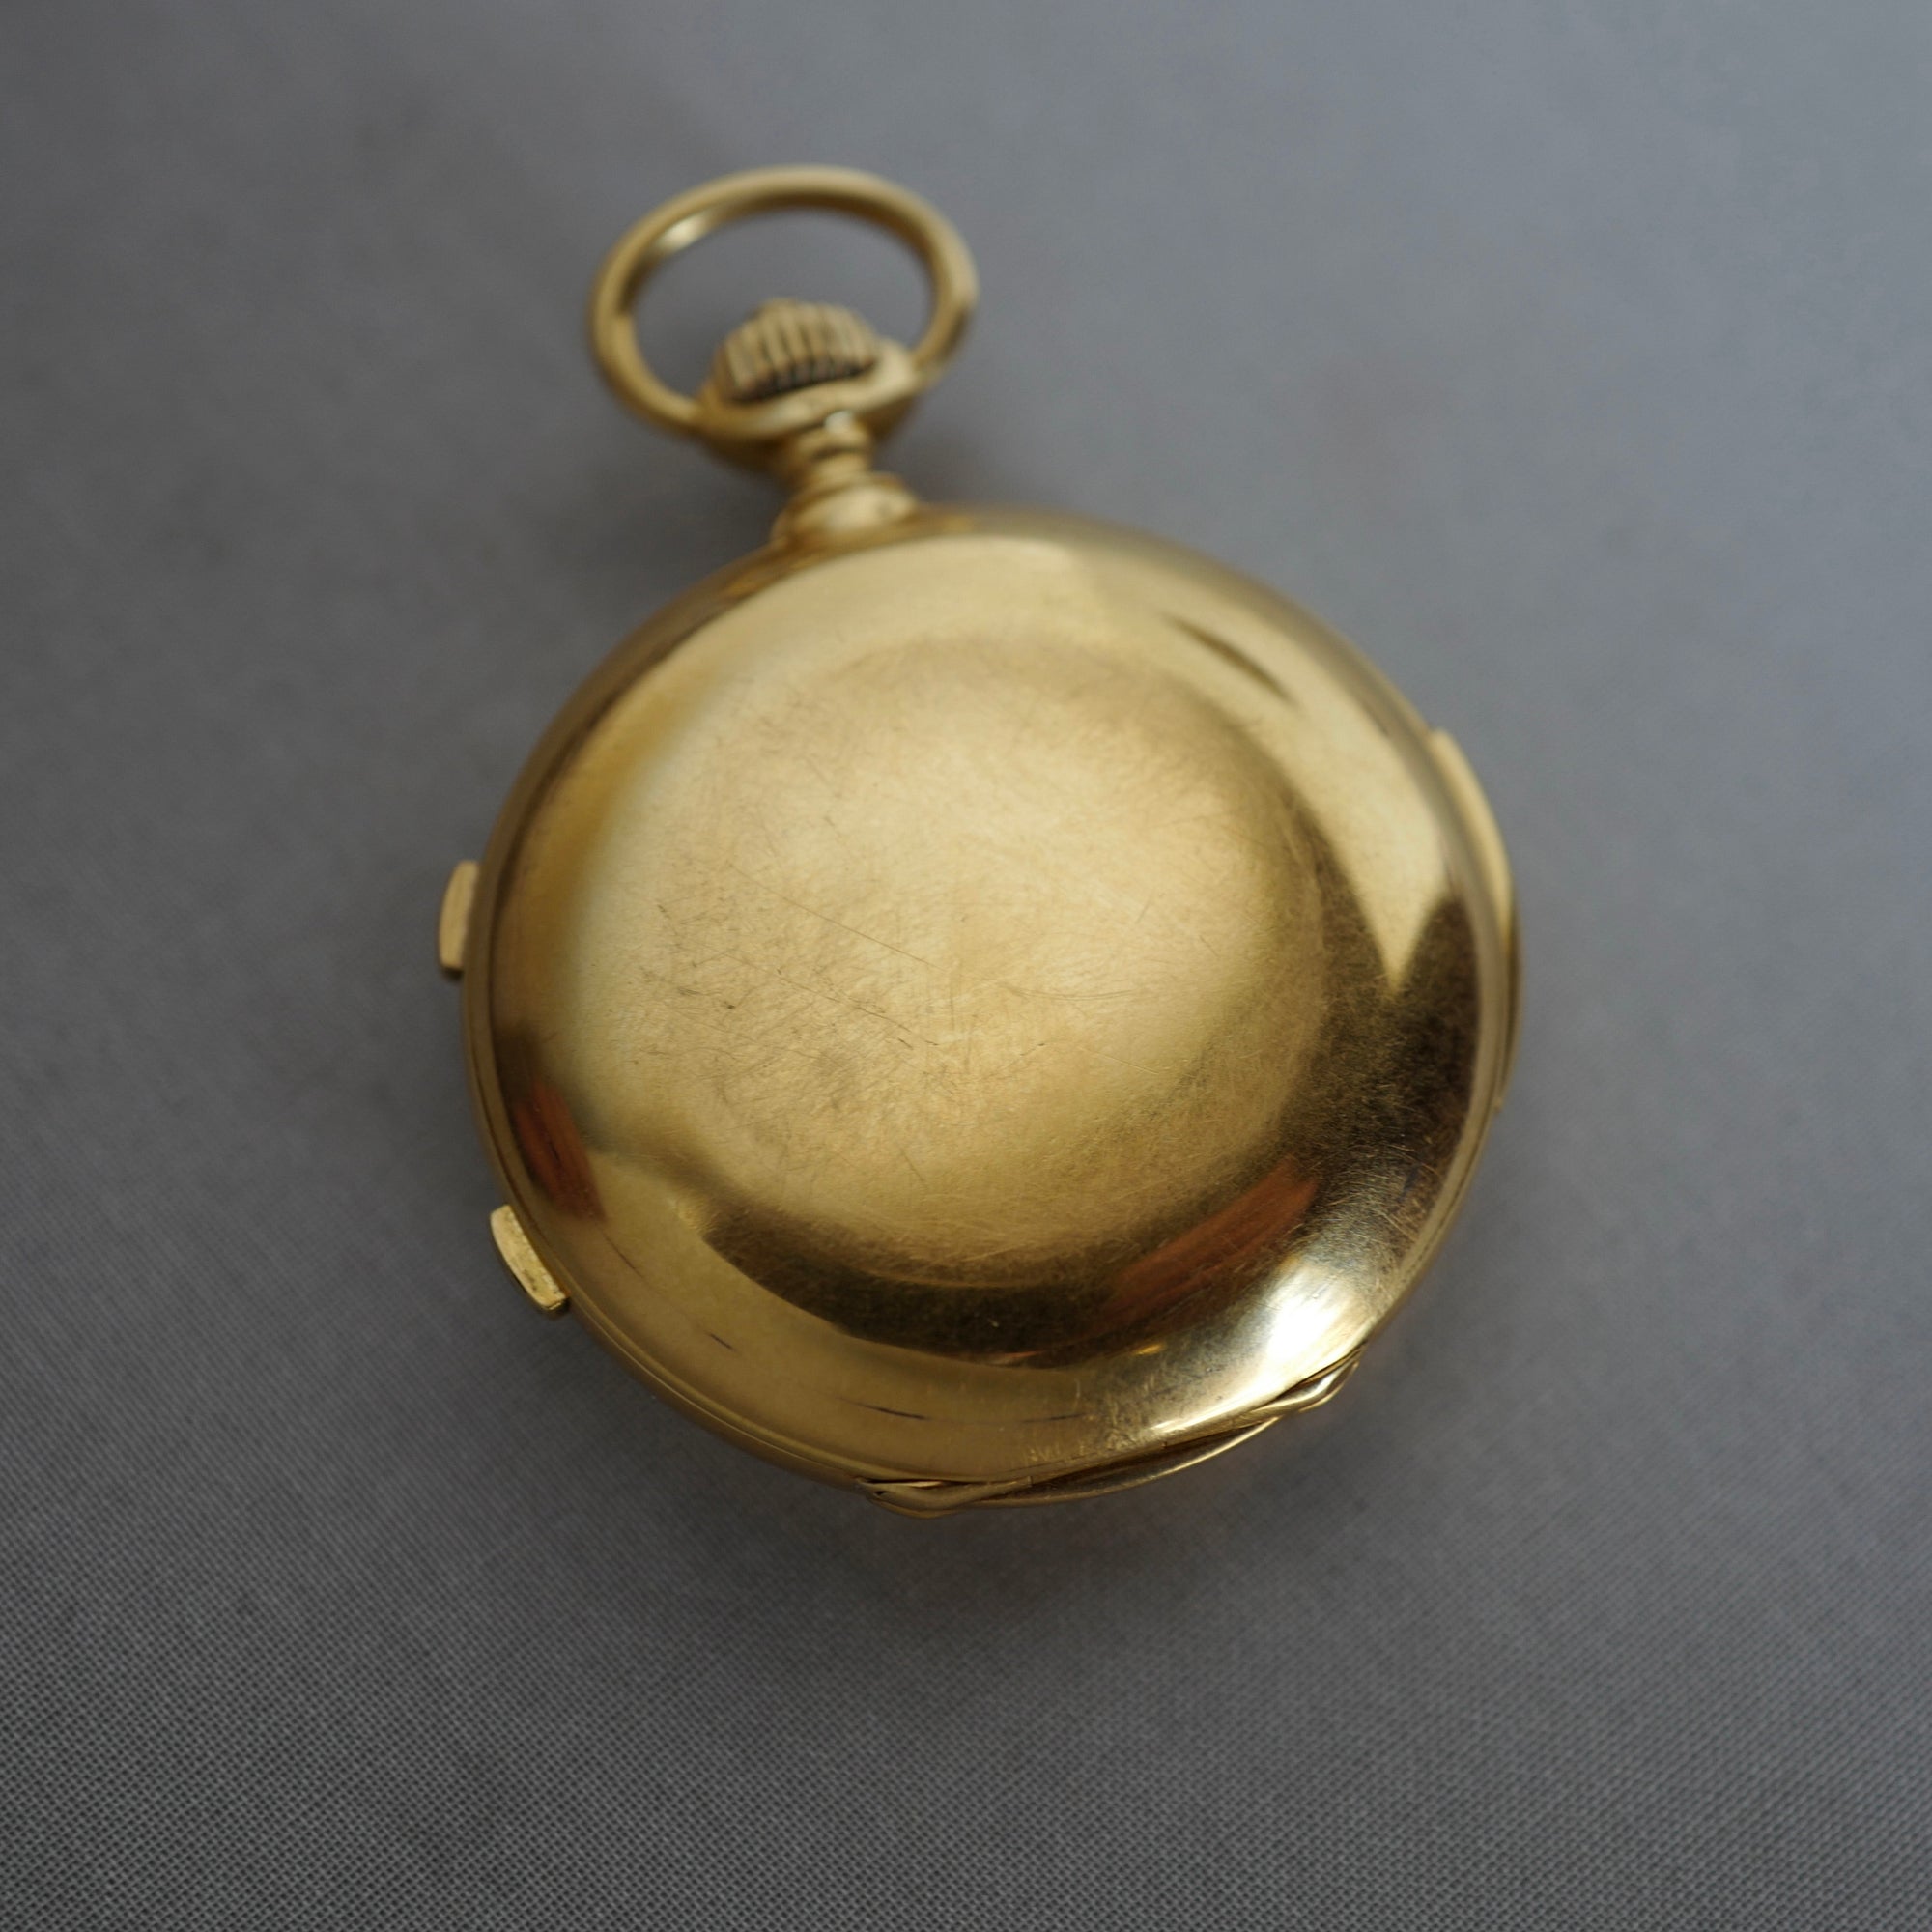 Vacheron Constantin - Vacheron Constantin Yellow Gold Grand Complication Pocket Watch (NEW ARRIVAL) - The Keystone Watches